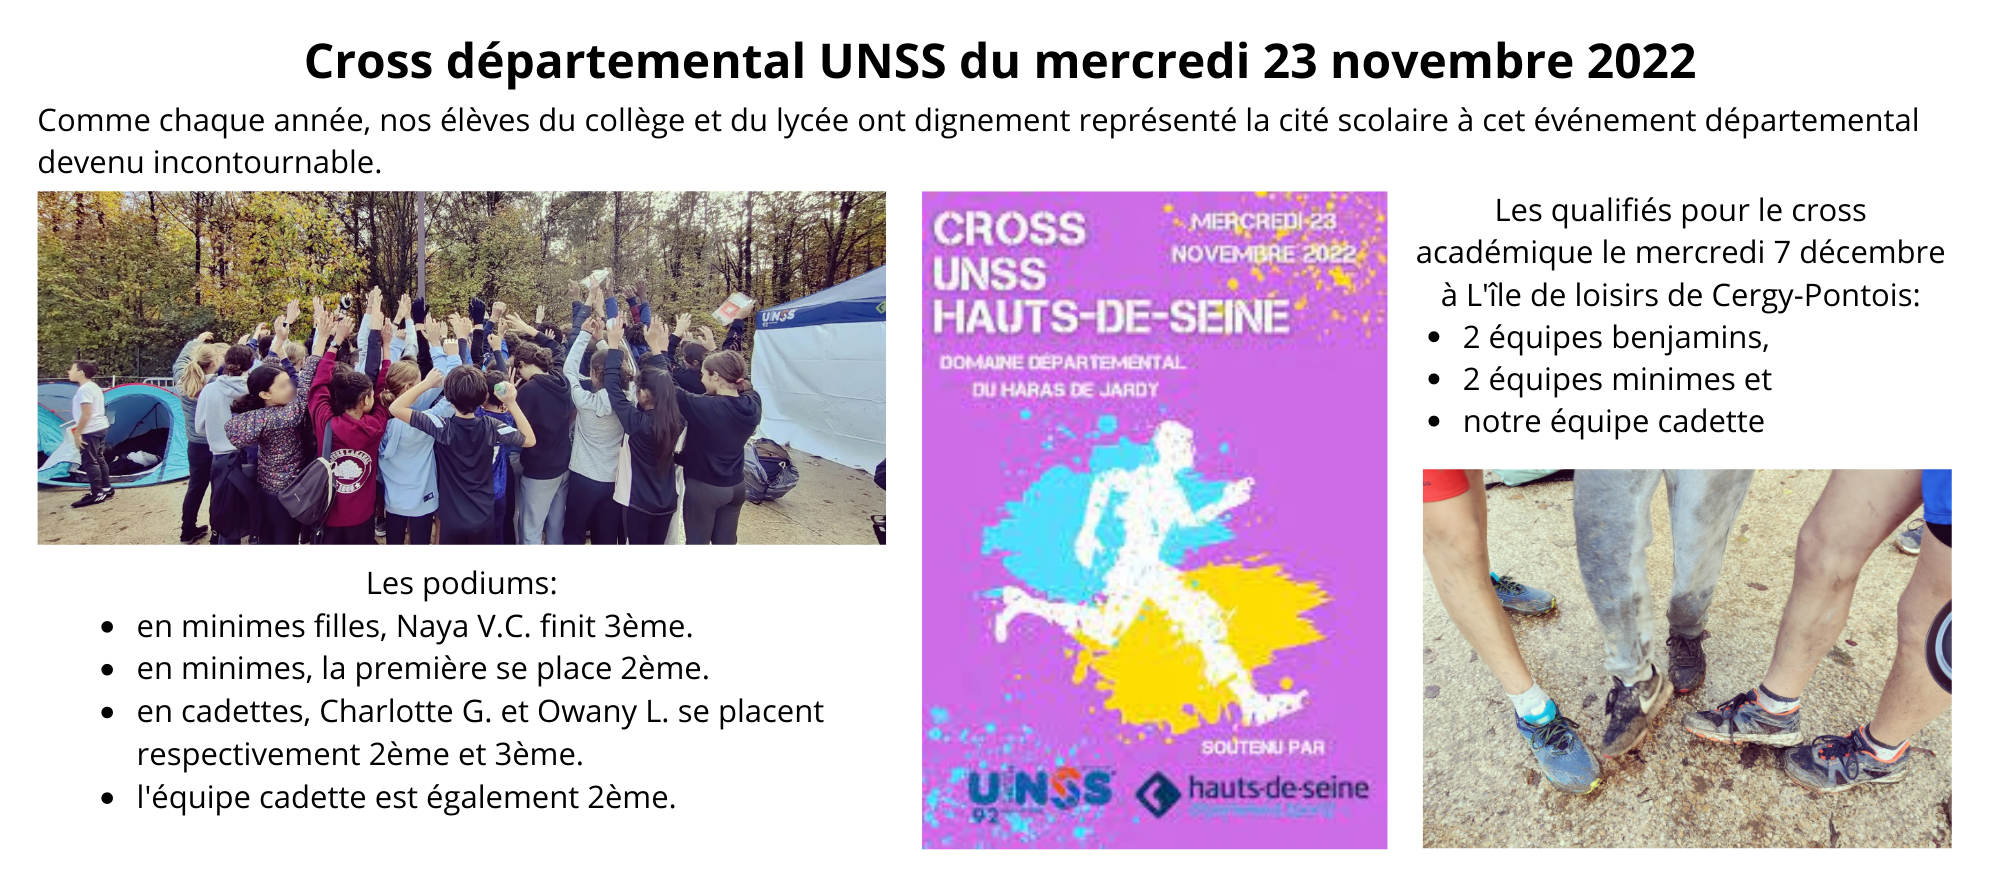 Cross dpartemental UNSS 2022